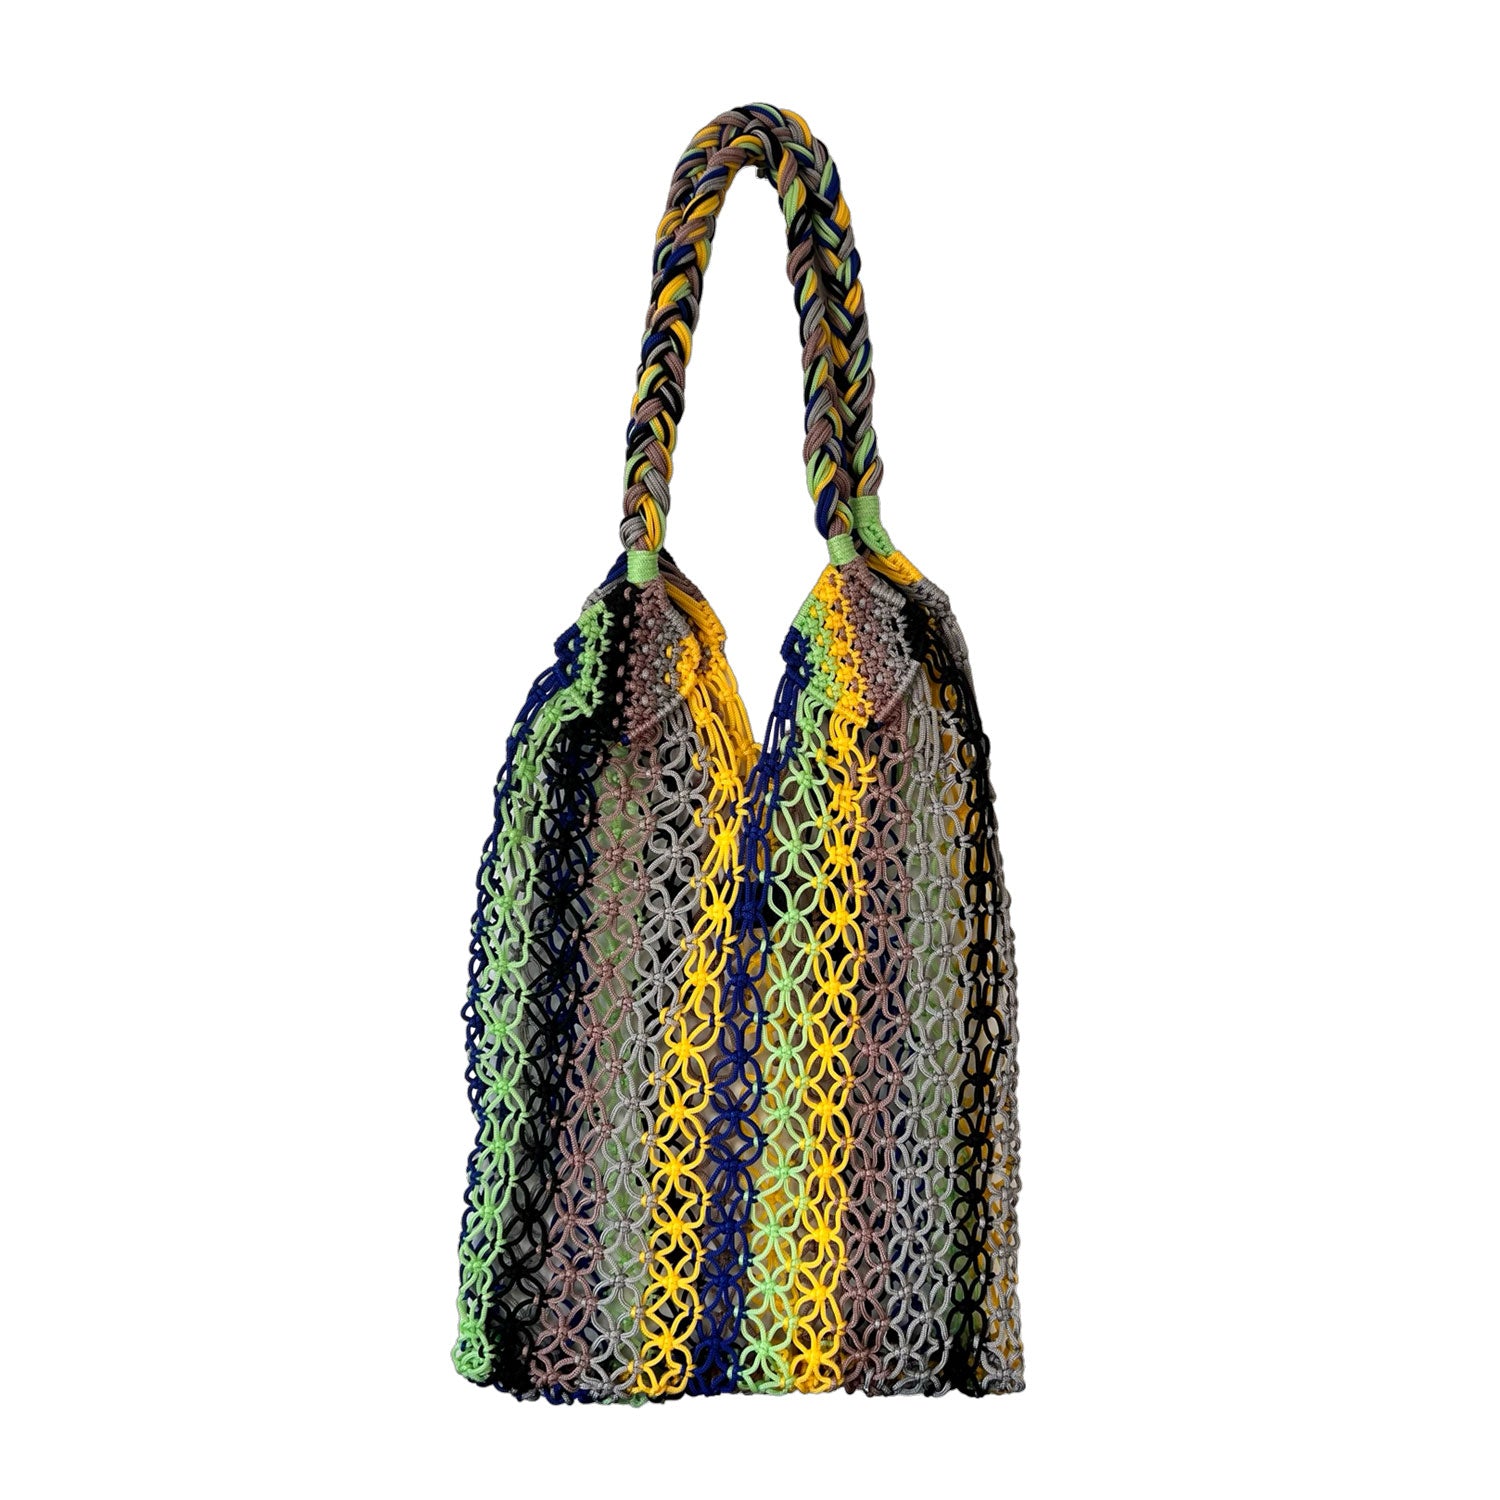 Braided Crochet Handbag in Black & Yellow